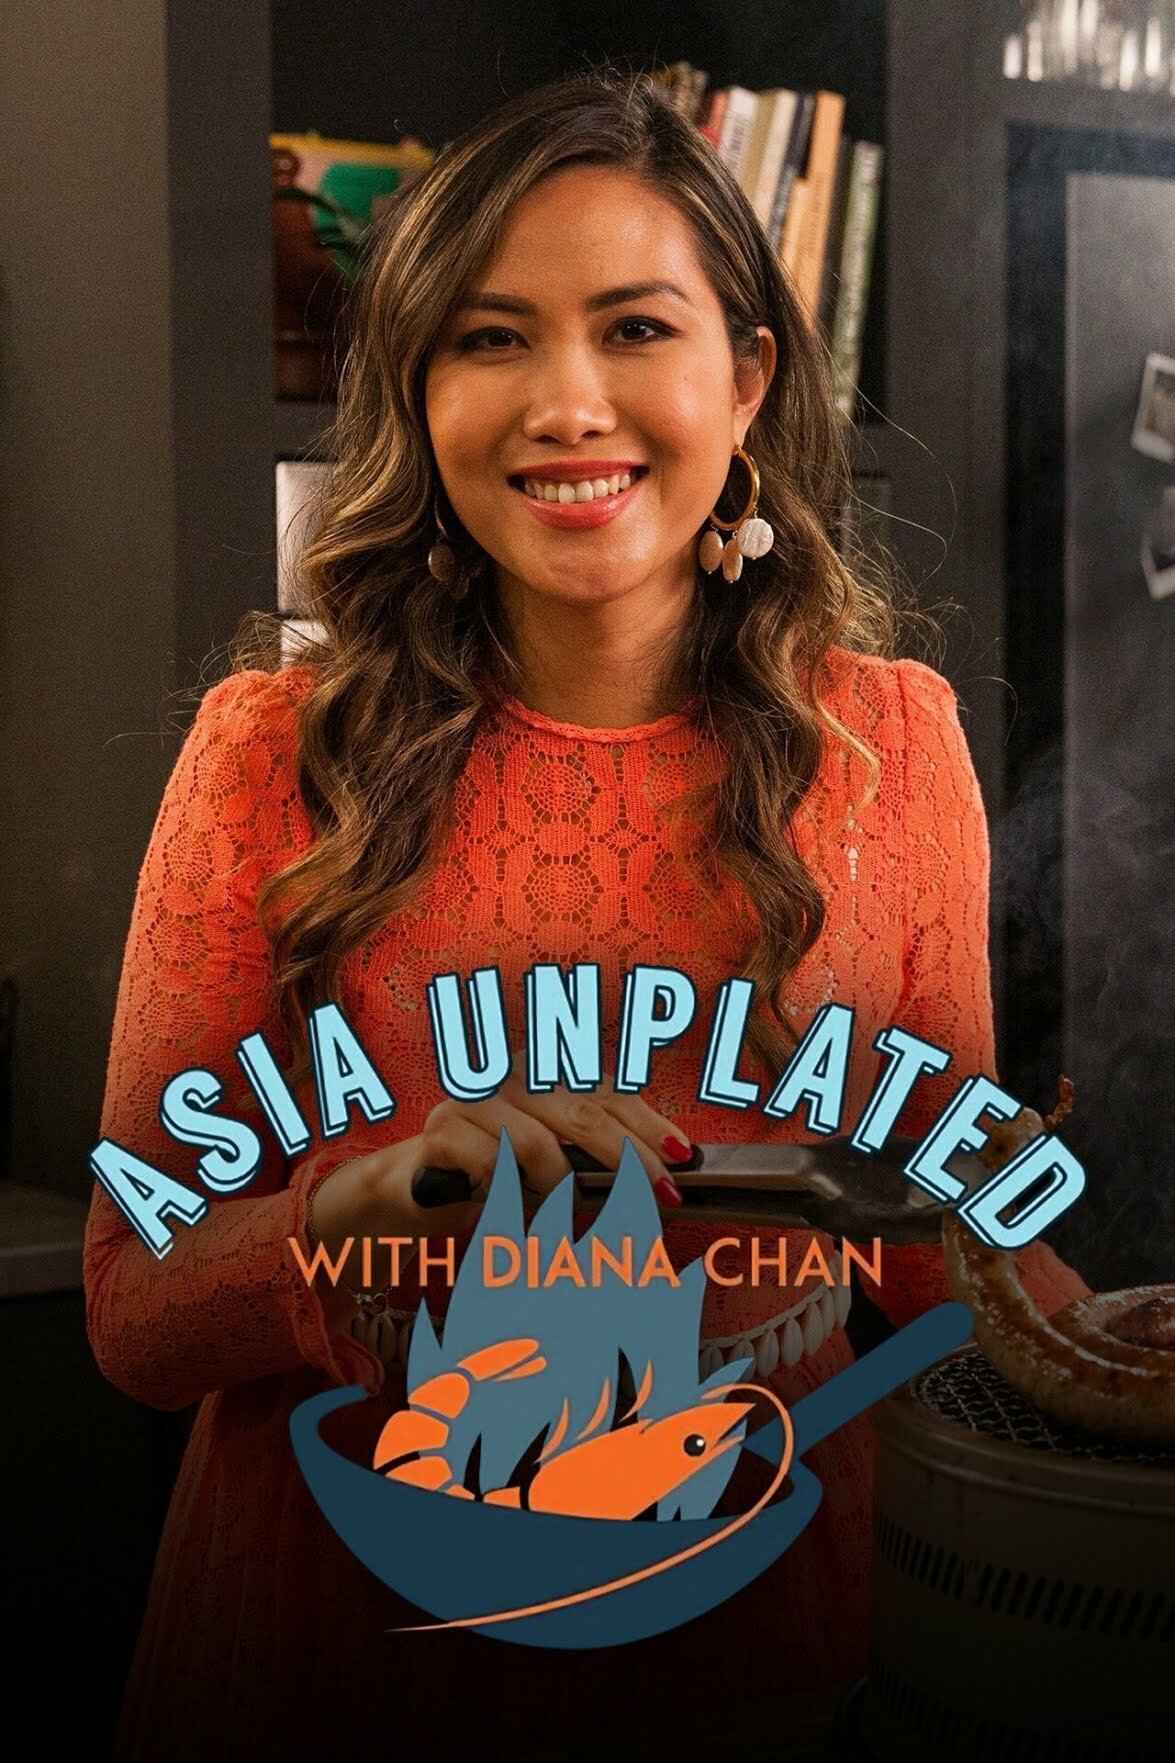 Asia Unplated with Diana Chan ne zaman